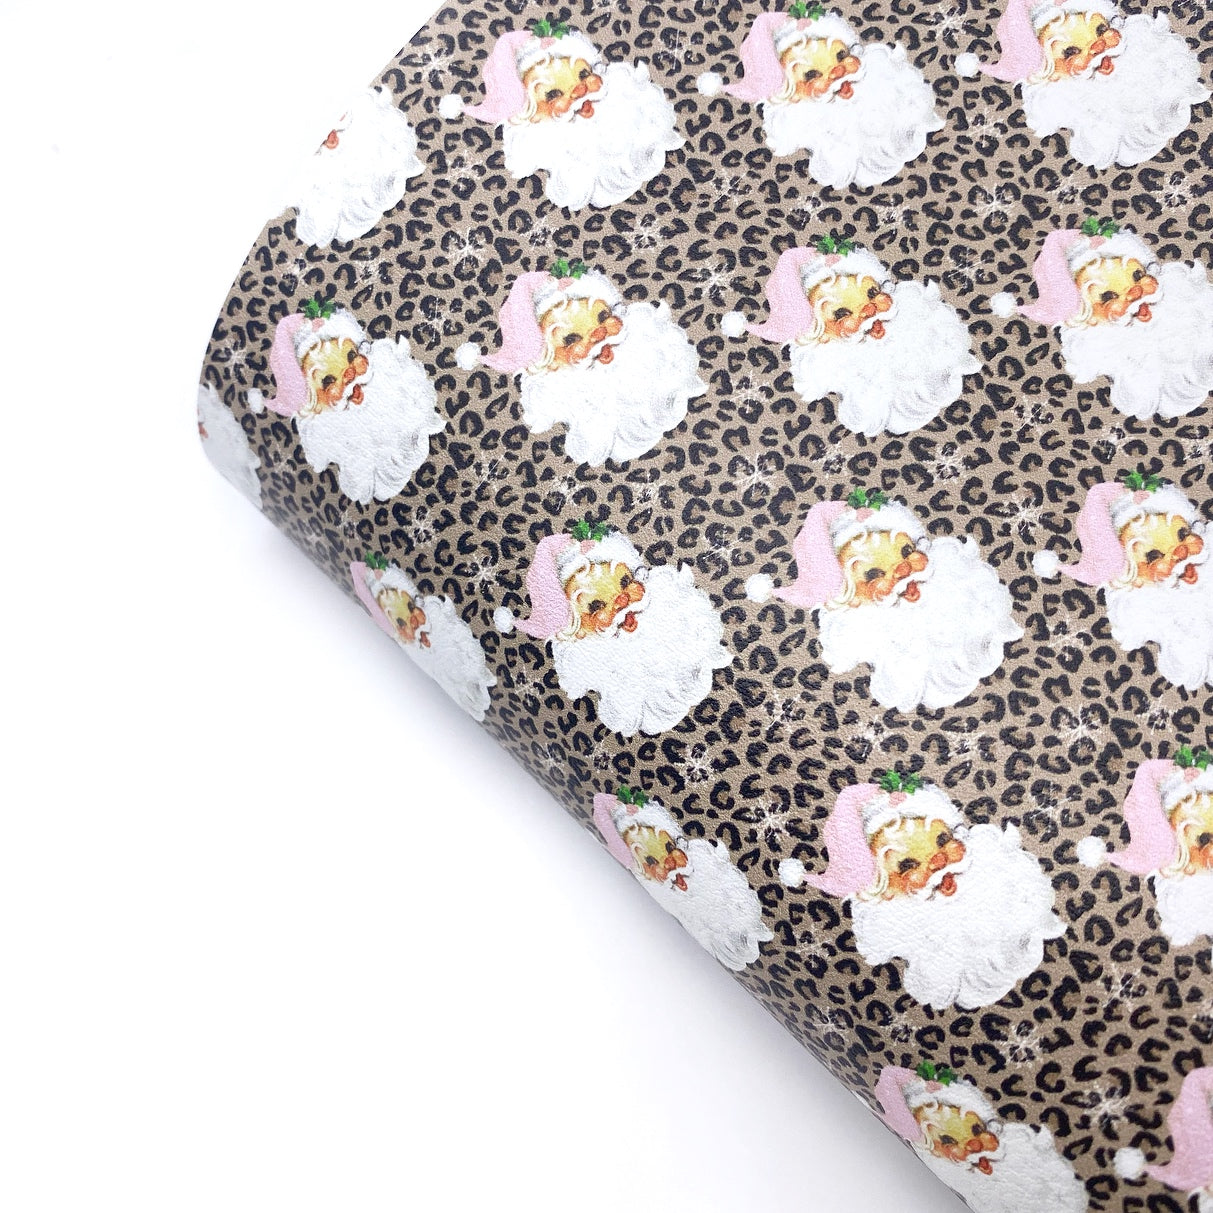 Leopard Print Pink Santa Premium Faux Leather Fabric Sheets